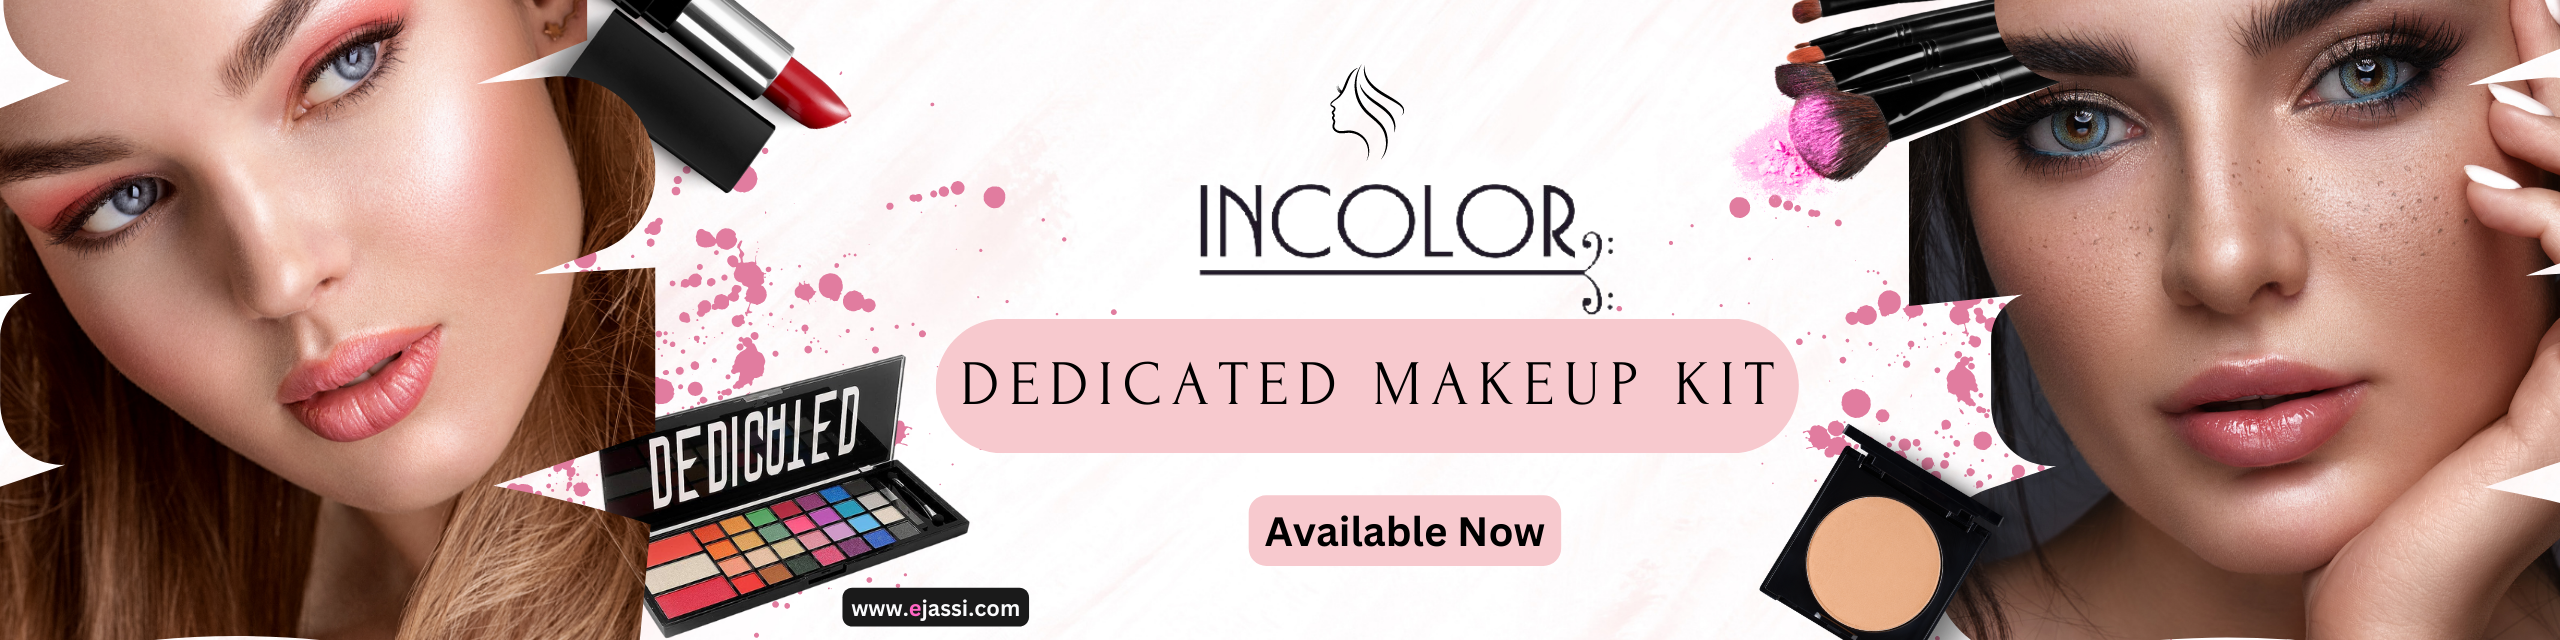 INCOLOR Makeup Kit